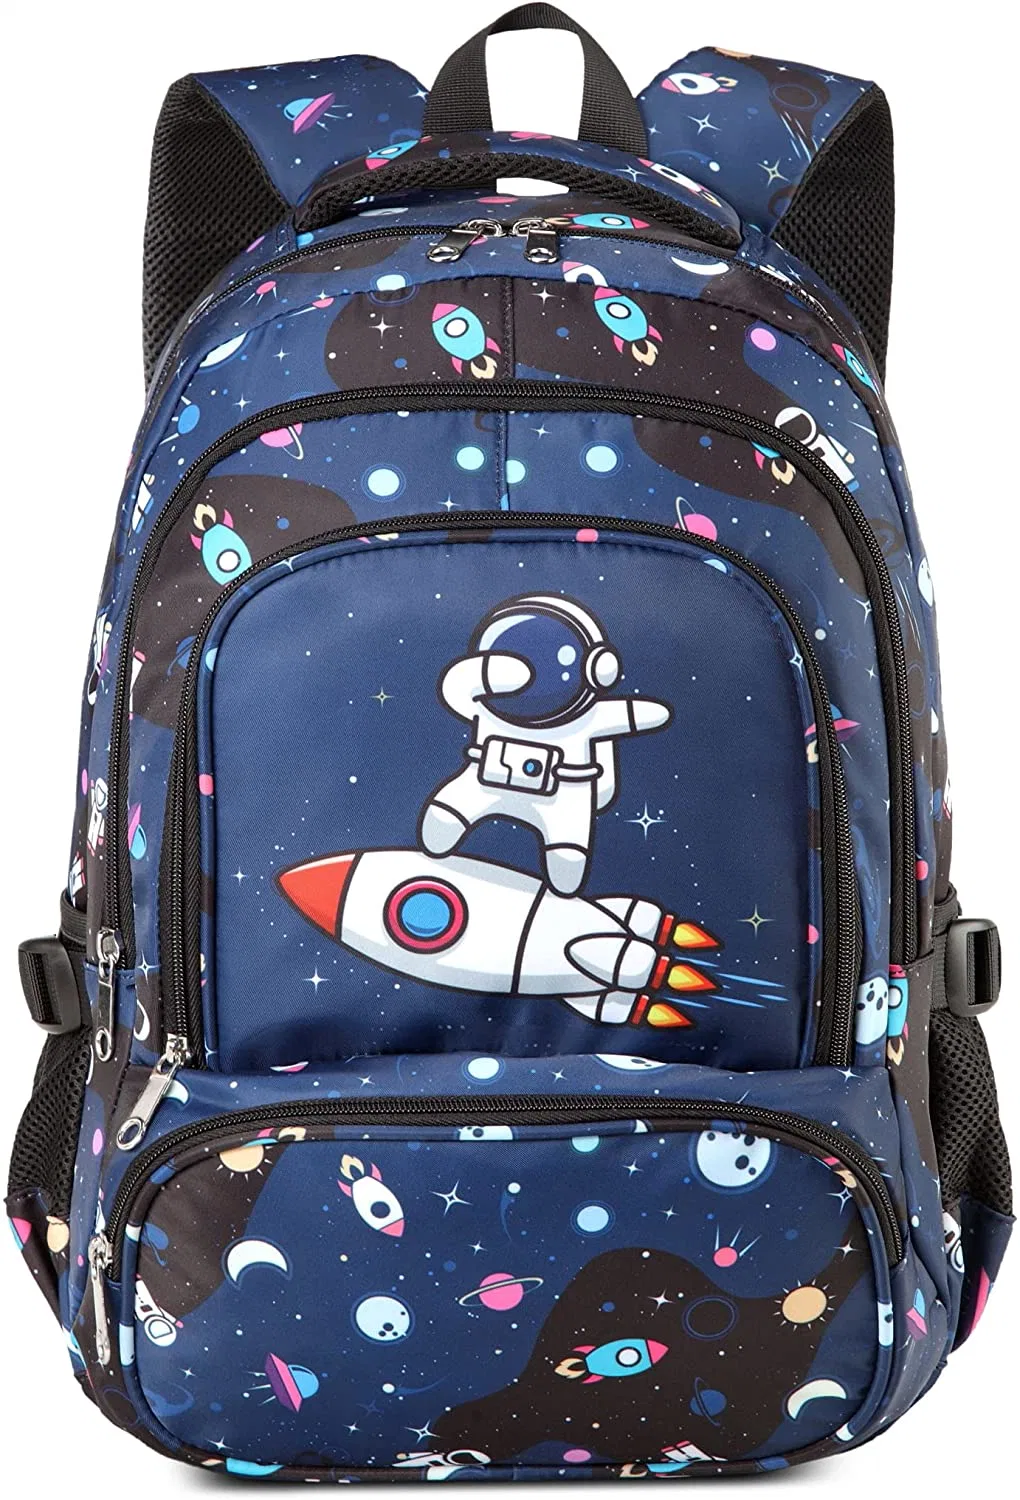 Elementary School Bags with Astonauts Prints Outer Space Ship Kindergarten Bookbag